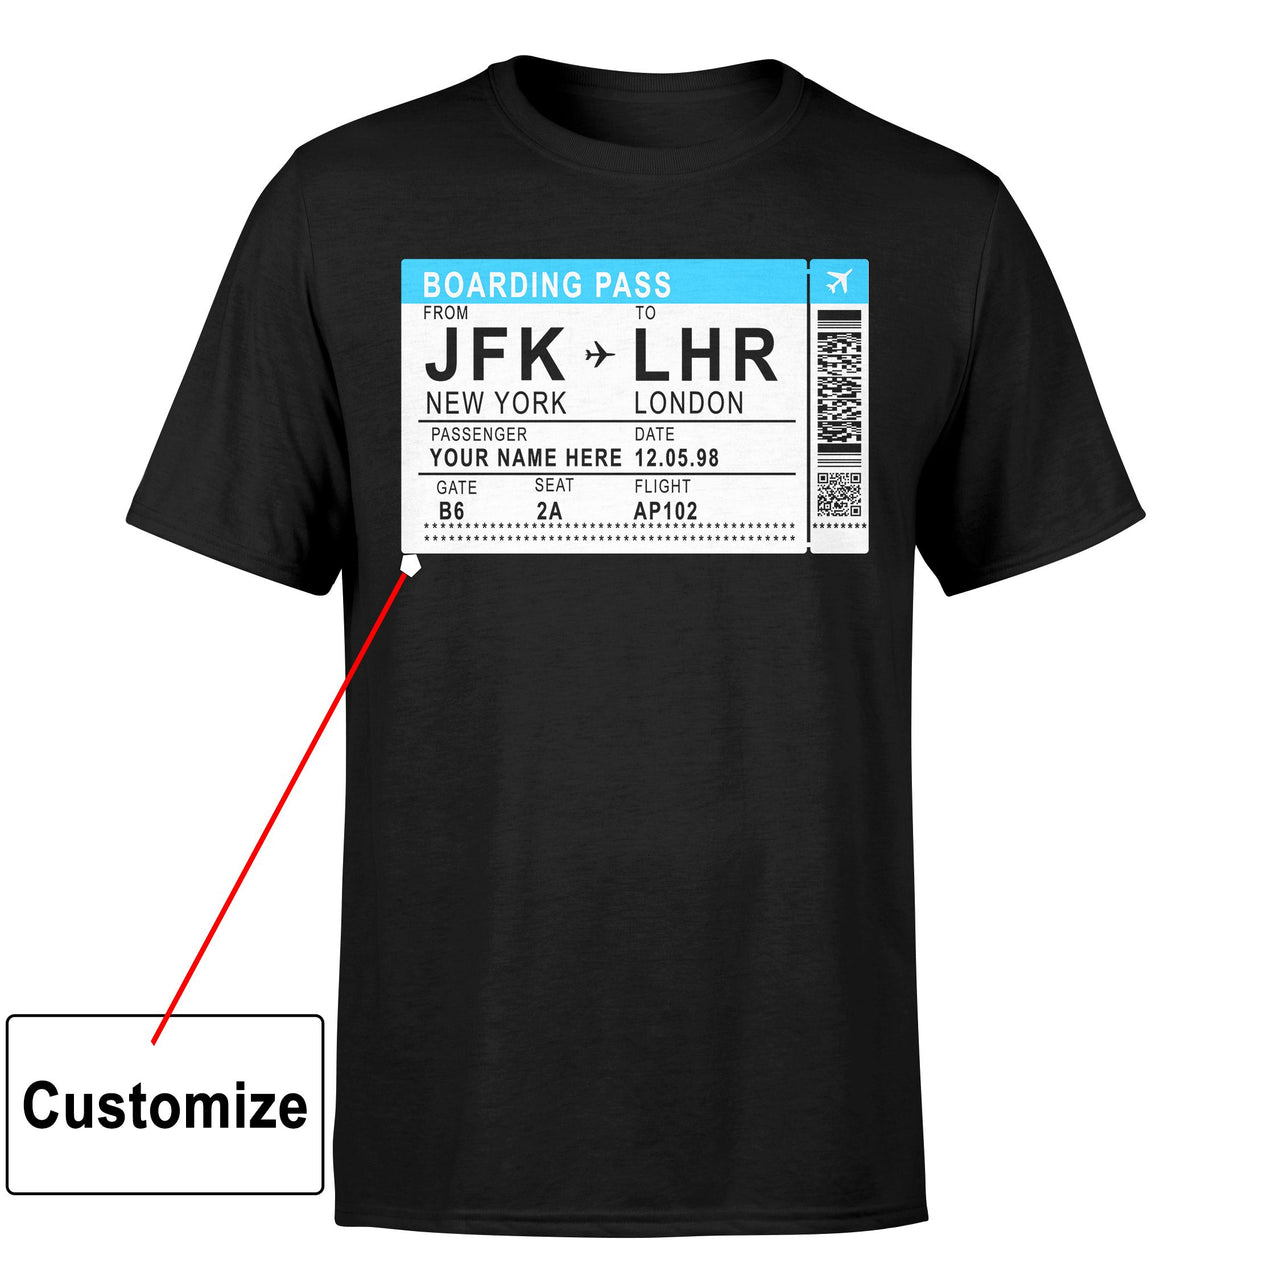 Customizable BOARDING PASS TICKET Designed T-Shirts